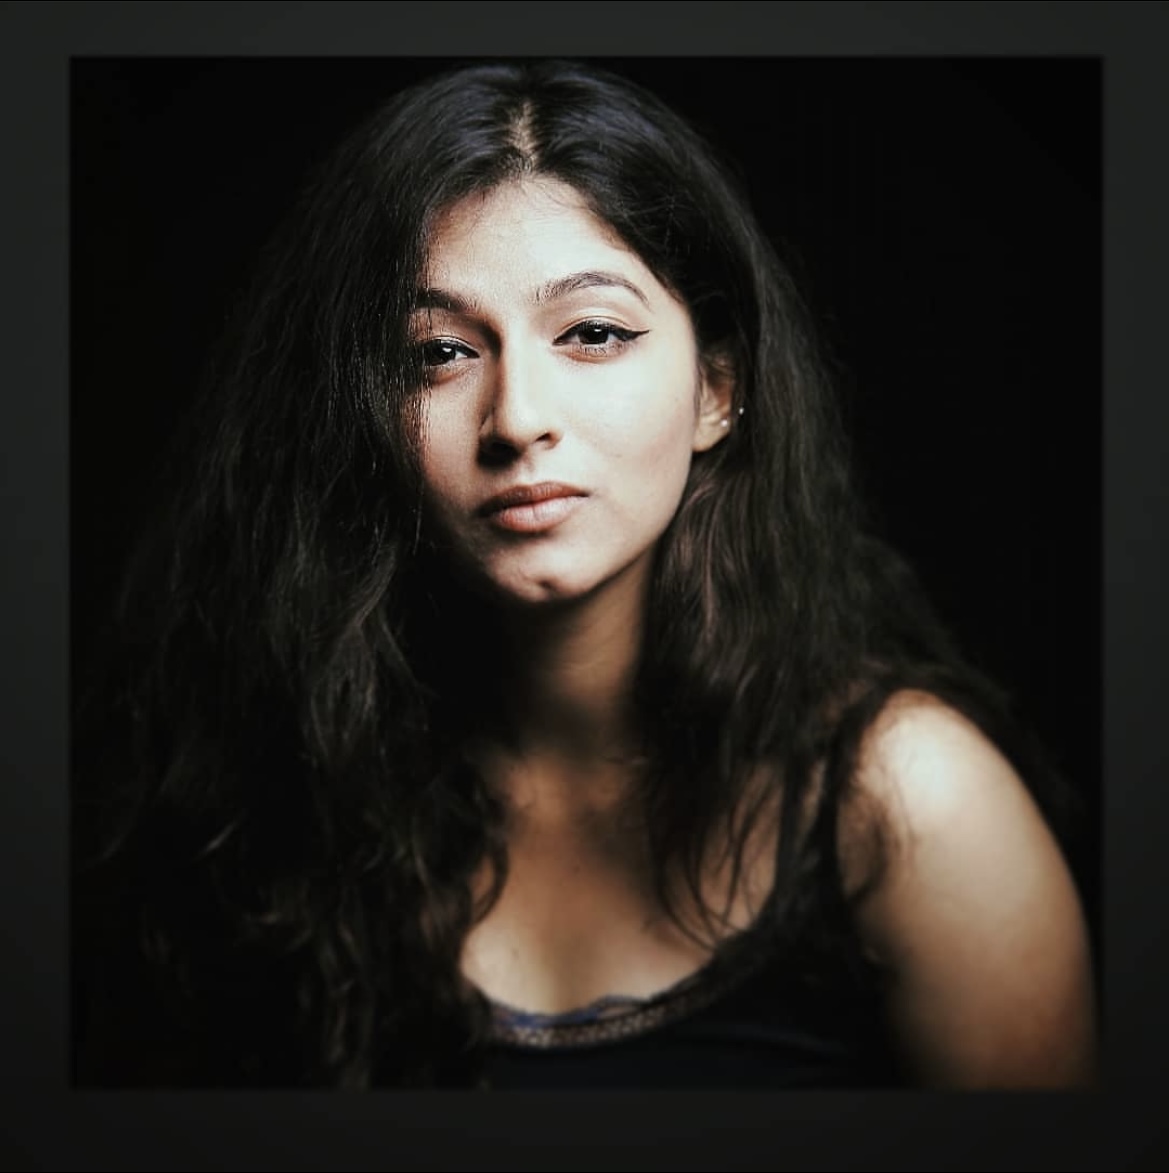 Bhargavi Sardesai Headshot. Her hair is down, she is in a black tank top against a black background.